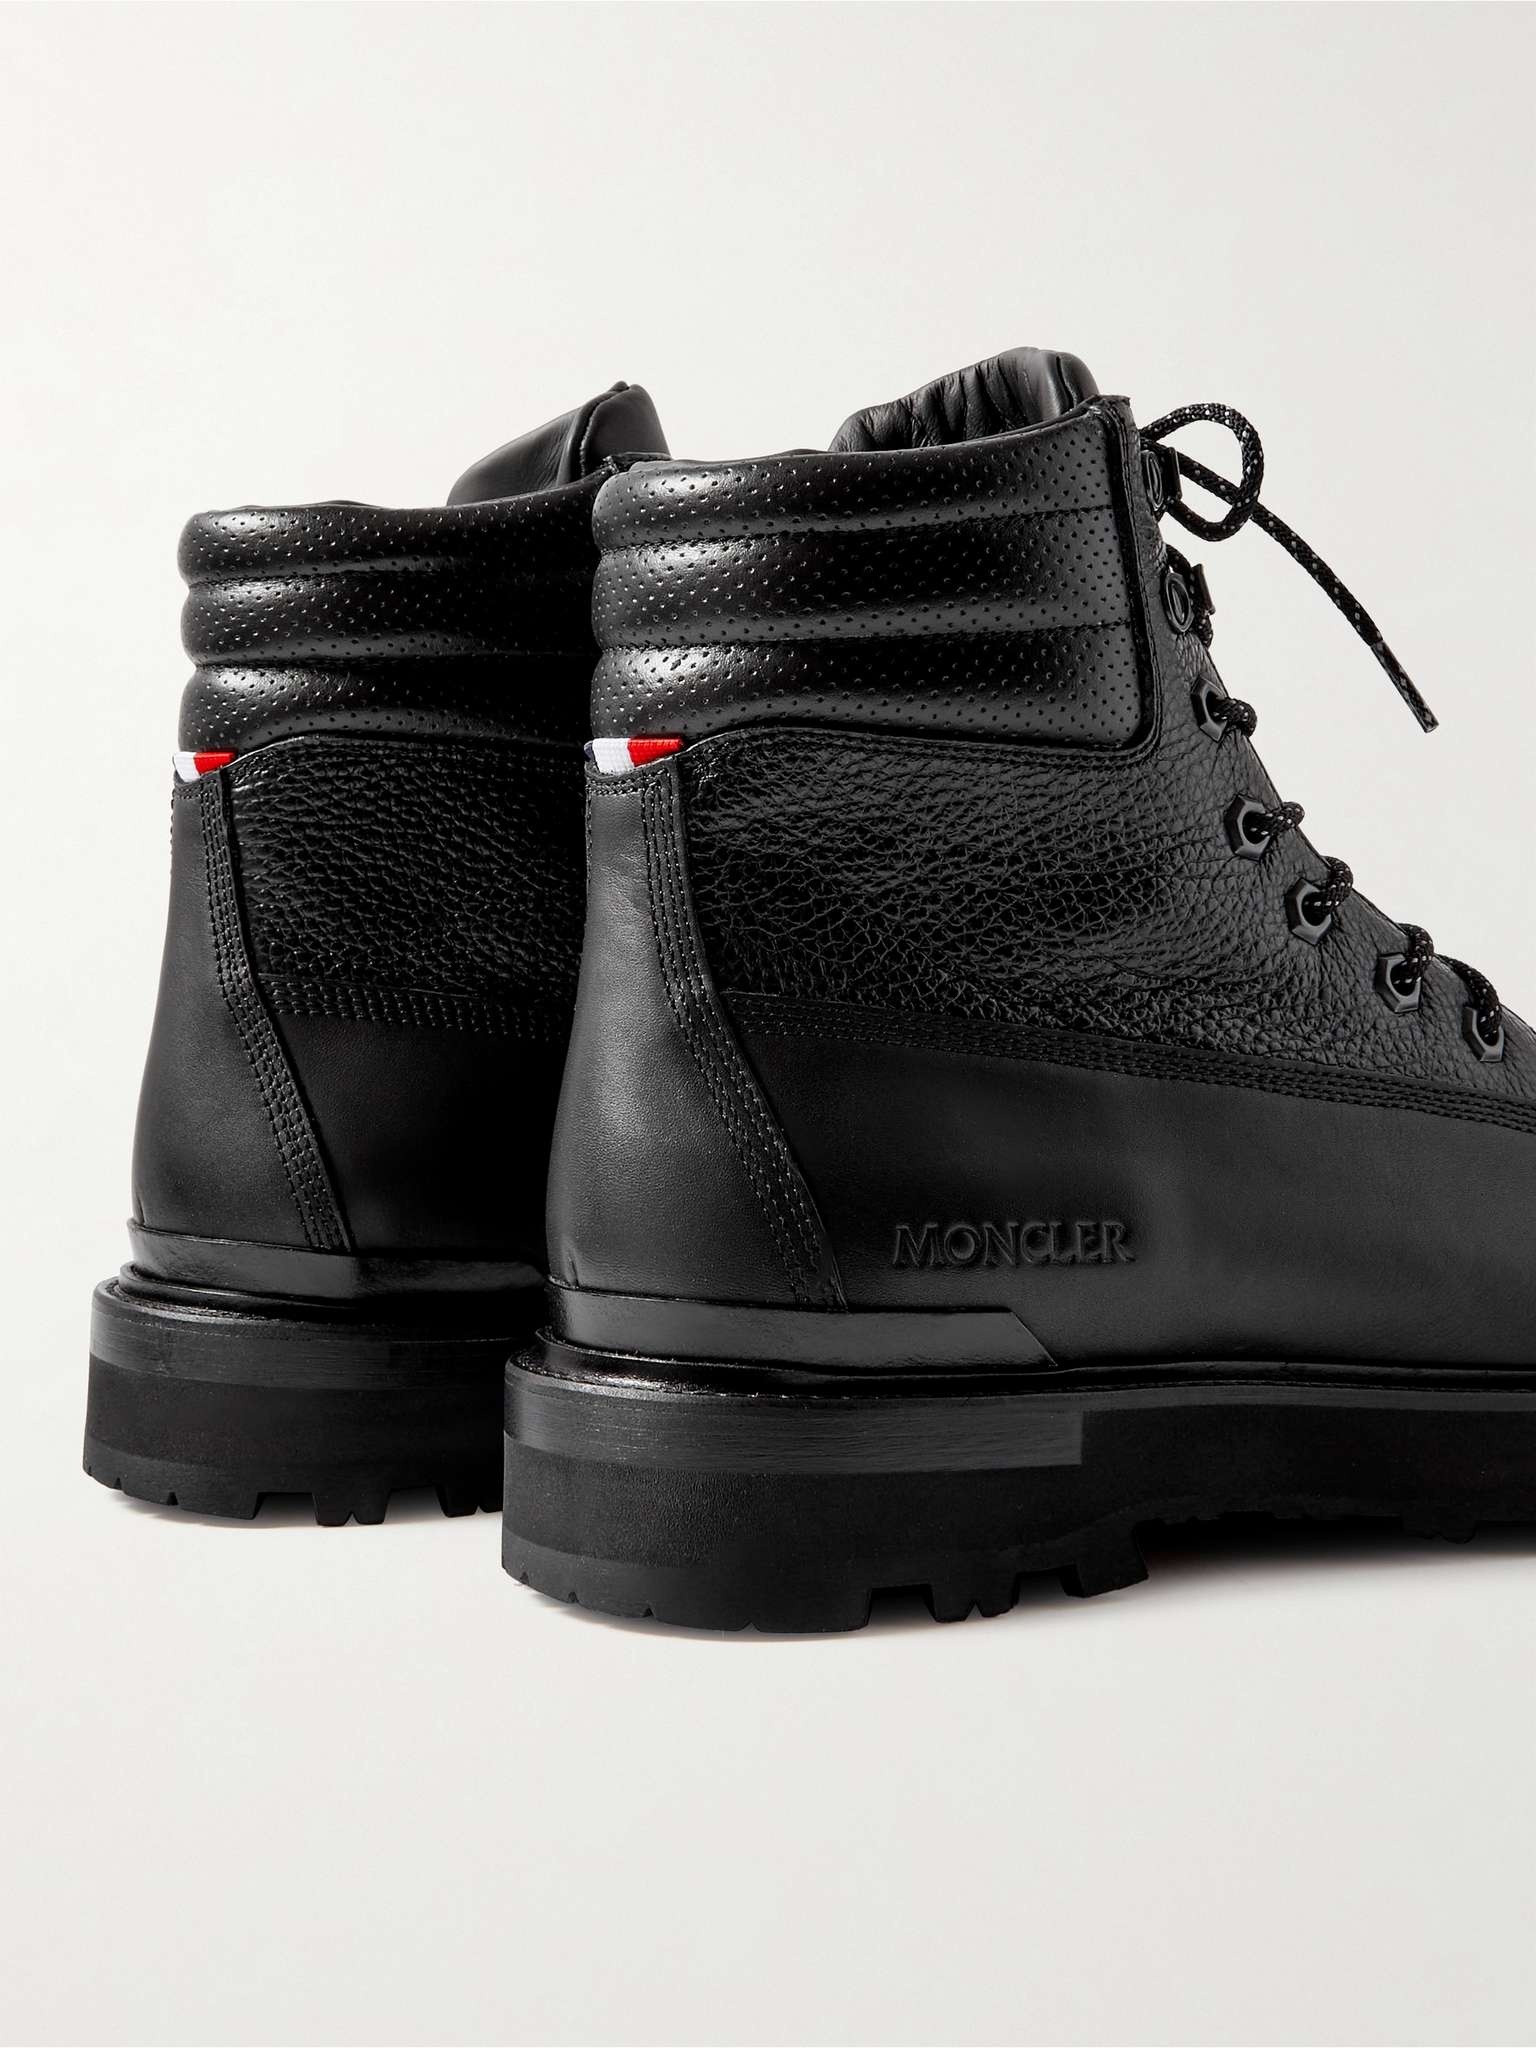 Peka Trek Leather Hiking Boots - 5